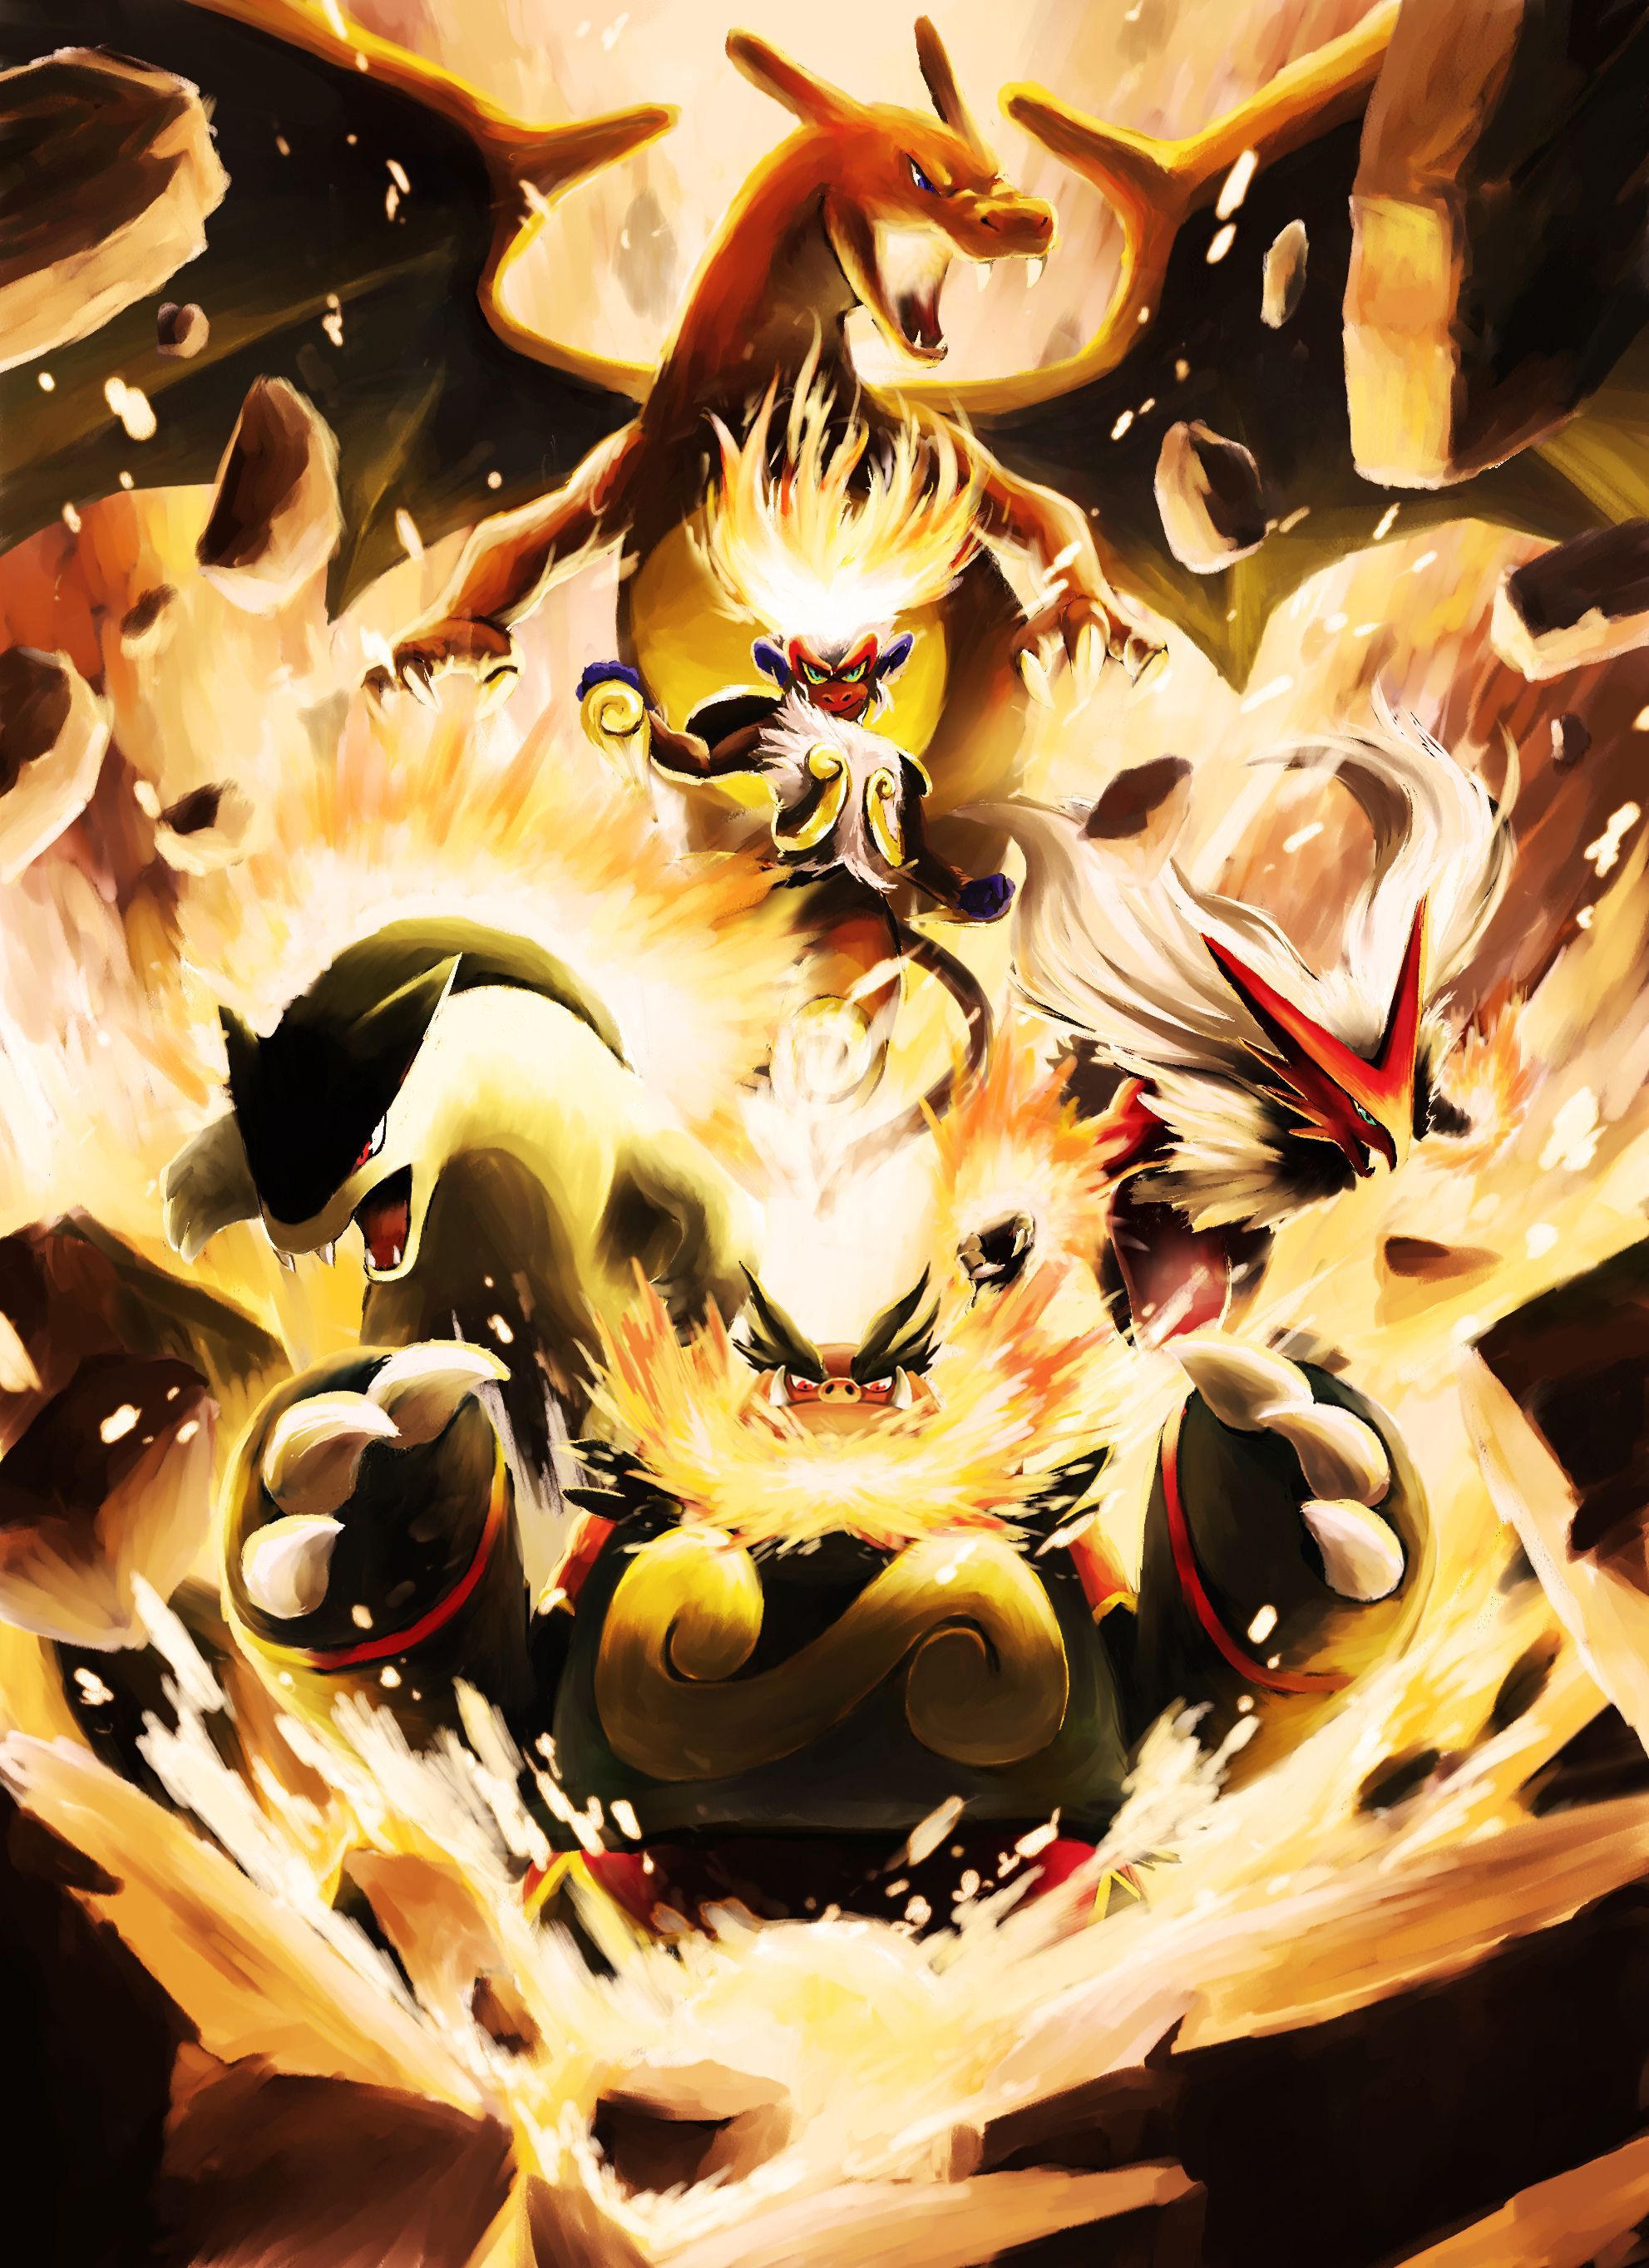 Fire Type Pokemon Starters. Pokemon, Pokemon Charizard, Fire Type Pokémon